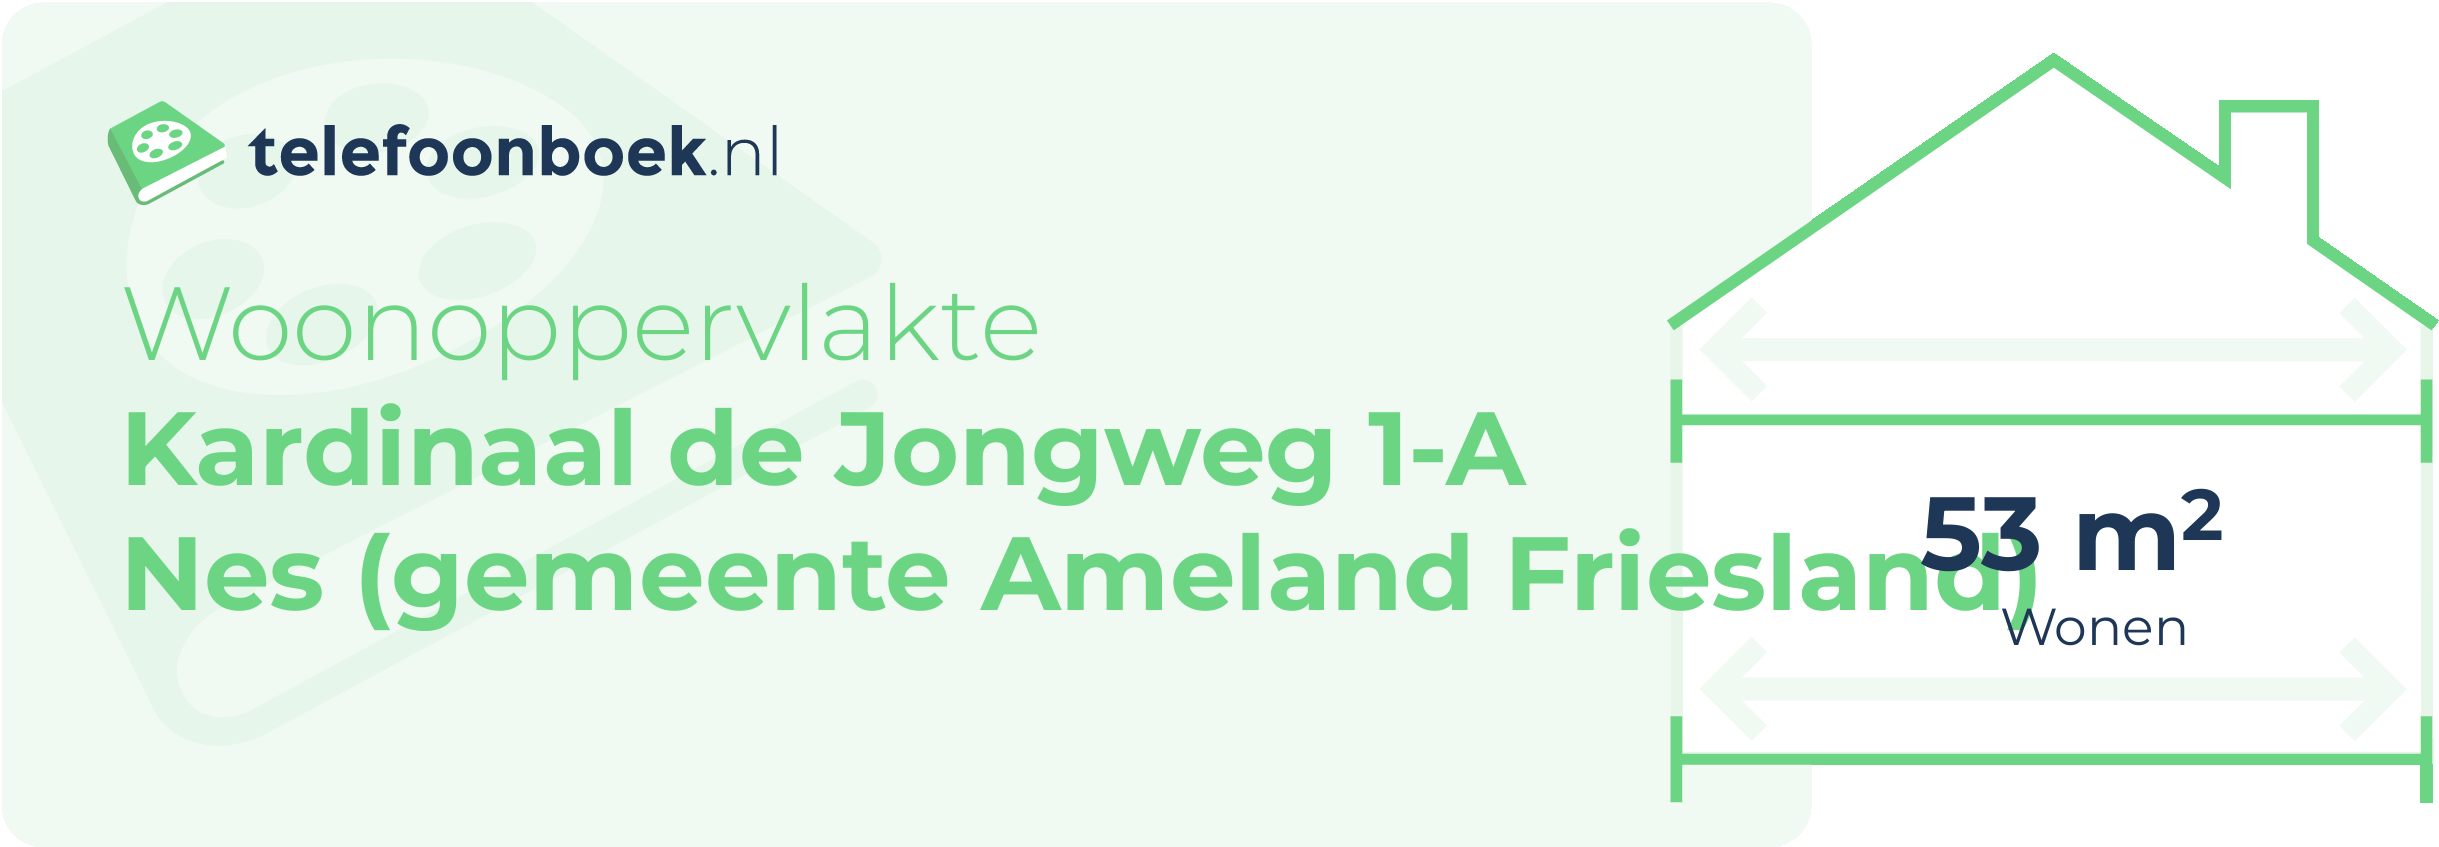 Woonoppervlakte Kardinaal De Jongweg 1-A Nes (gemeente Ameland Friesland)